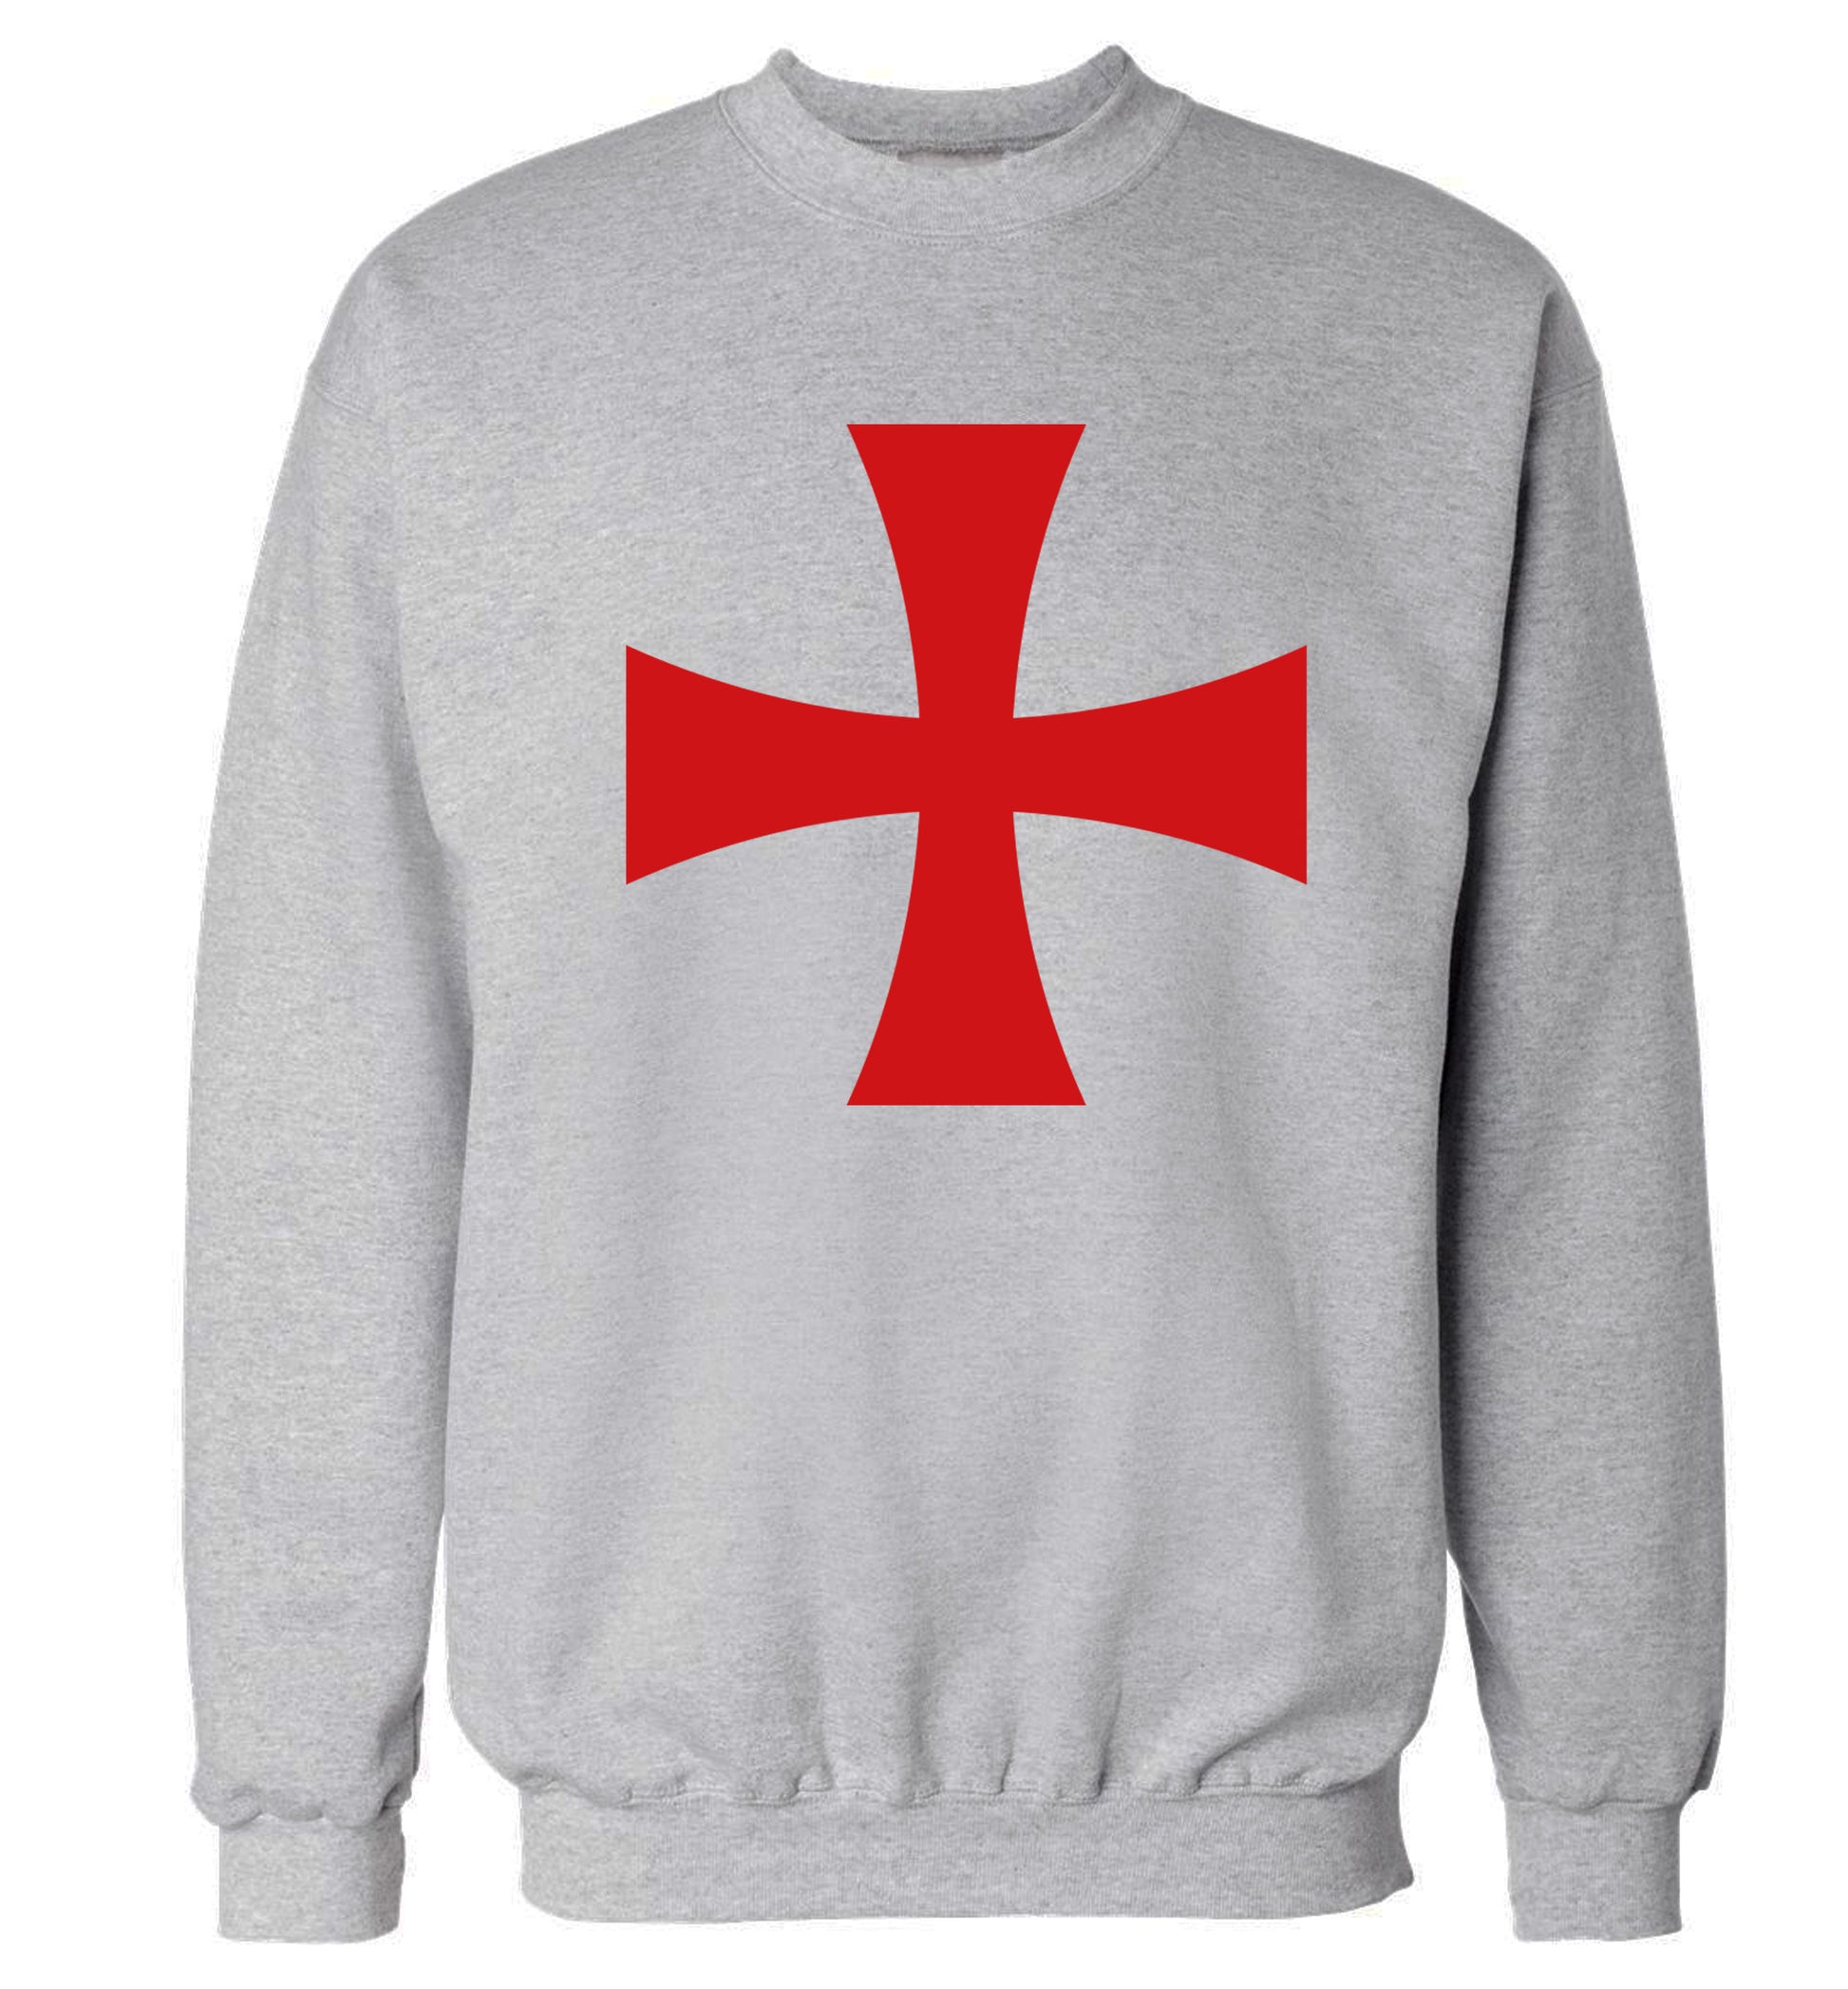 Knights Templar cross Adult's unisex grey Sweater 2XL